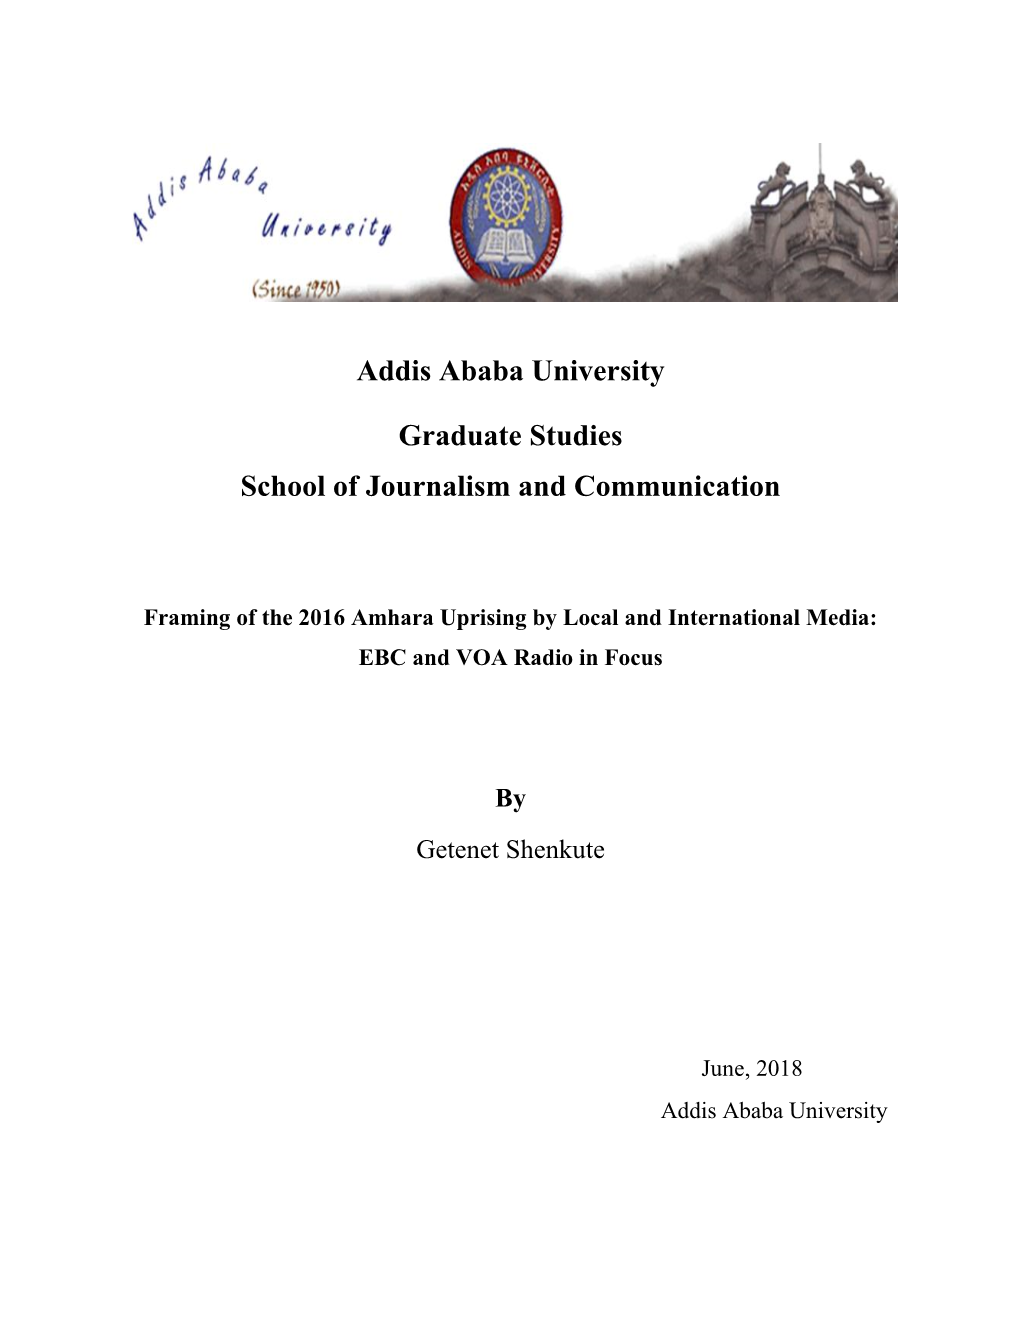 Addis Ababa University Graduate Studies School of Journalism And